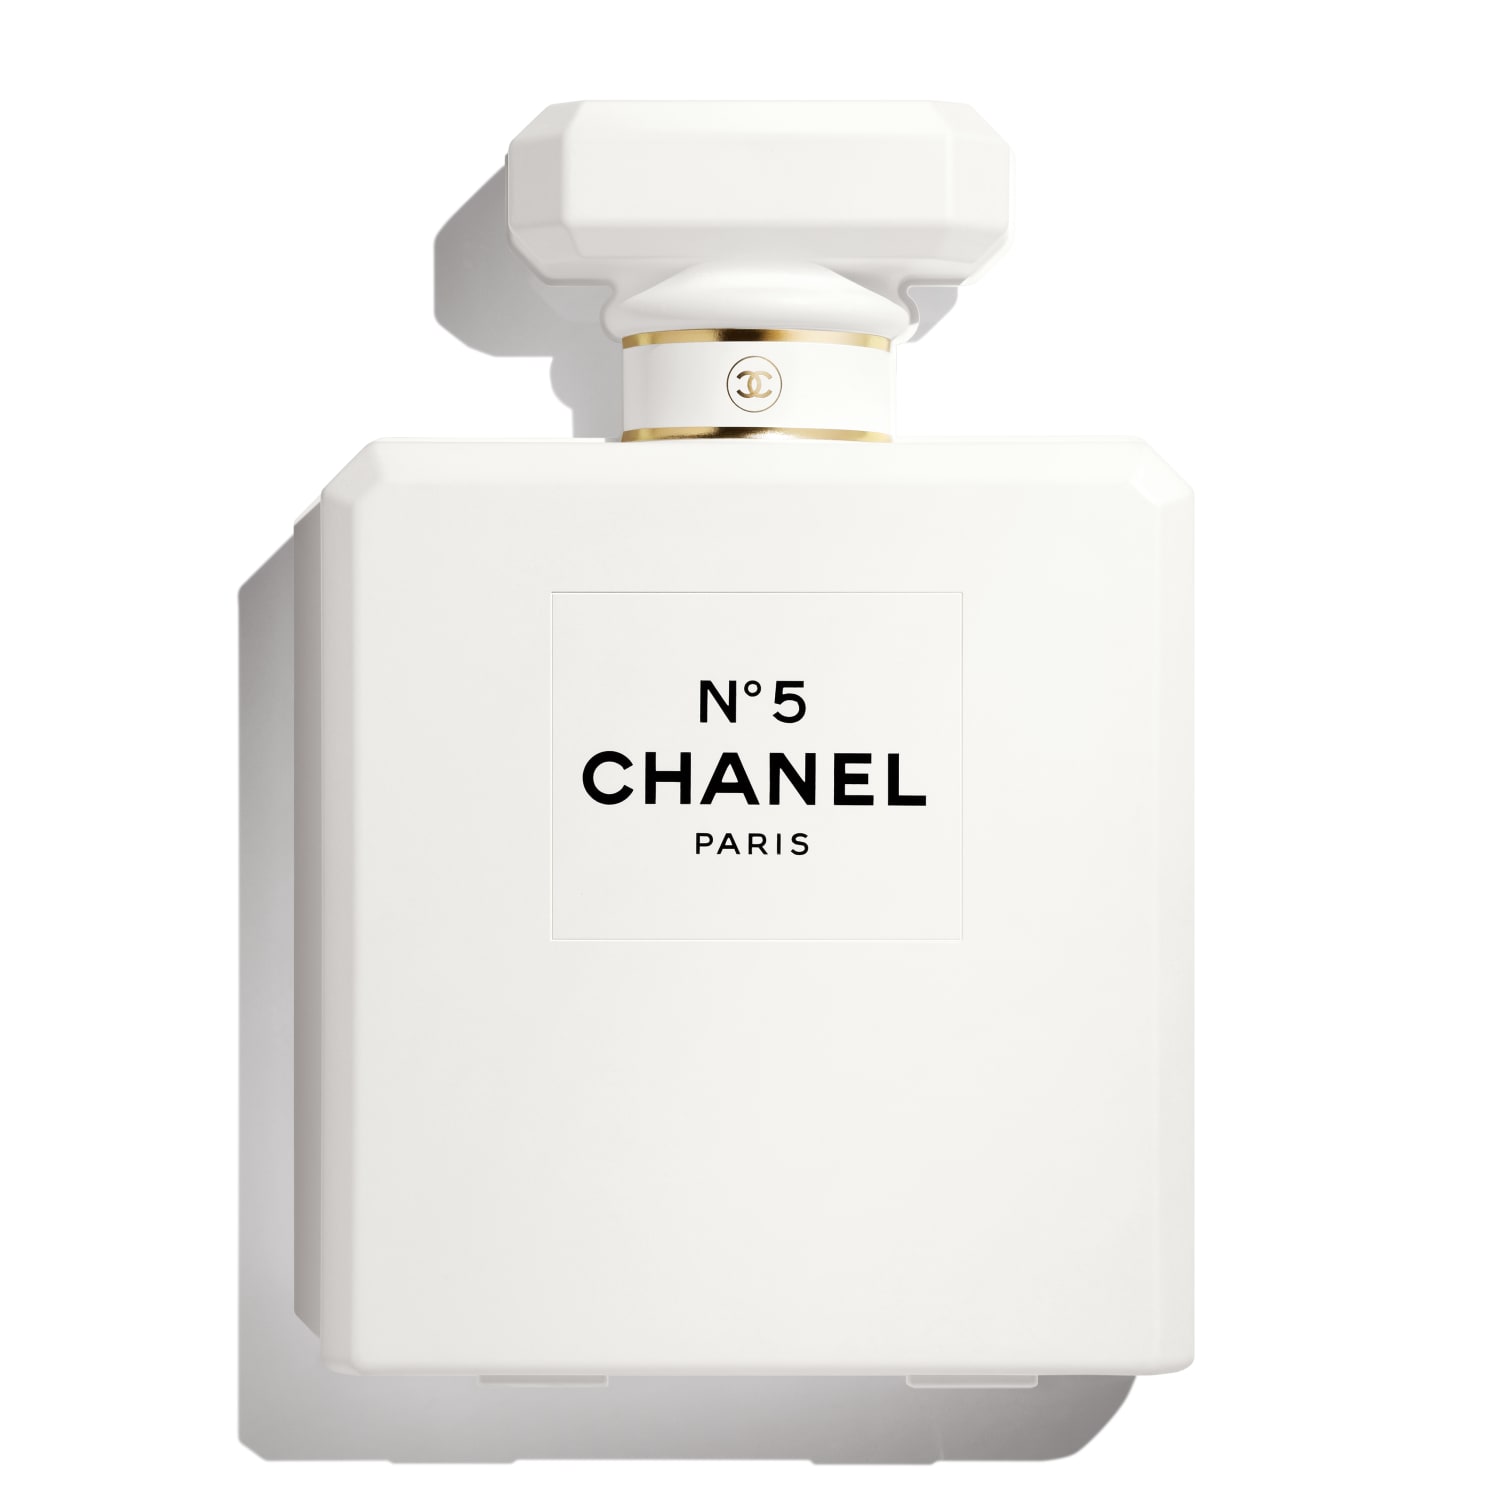 Chanel's S$1,150 advent calendar draws flak for including 'junk